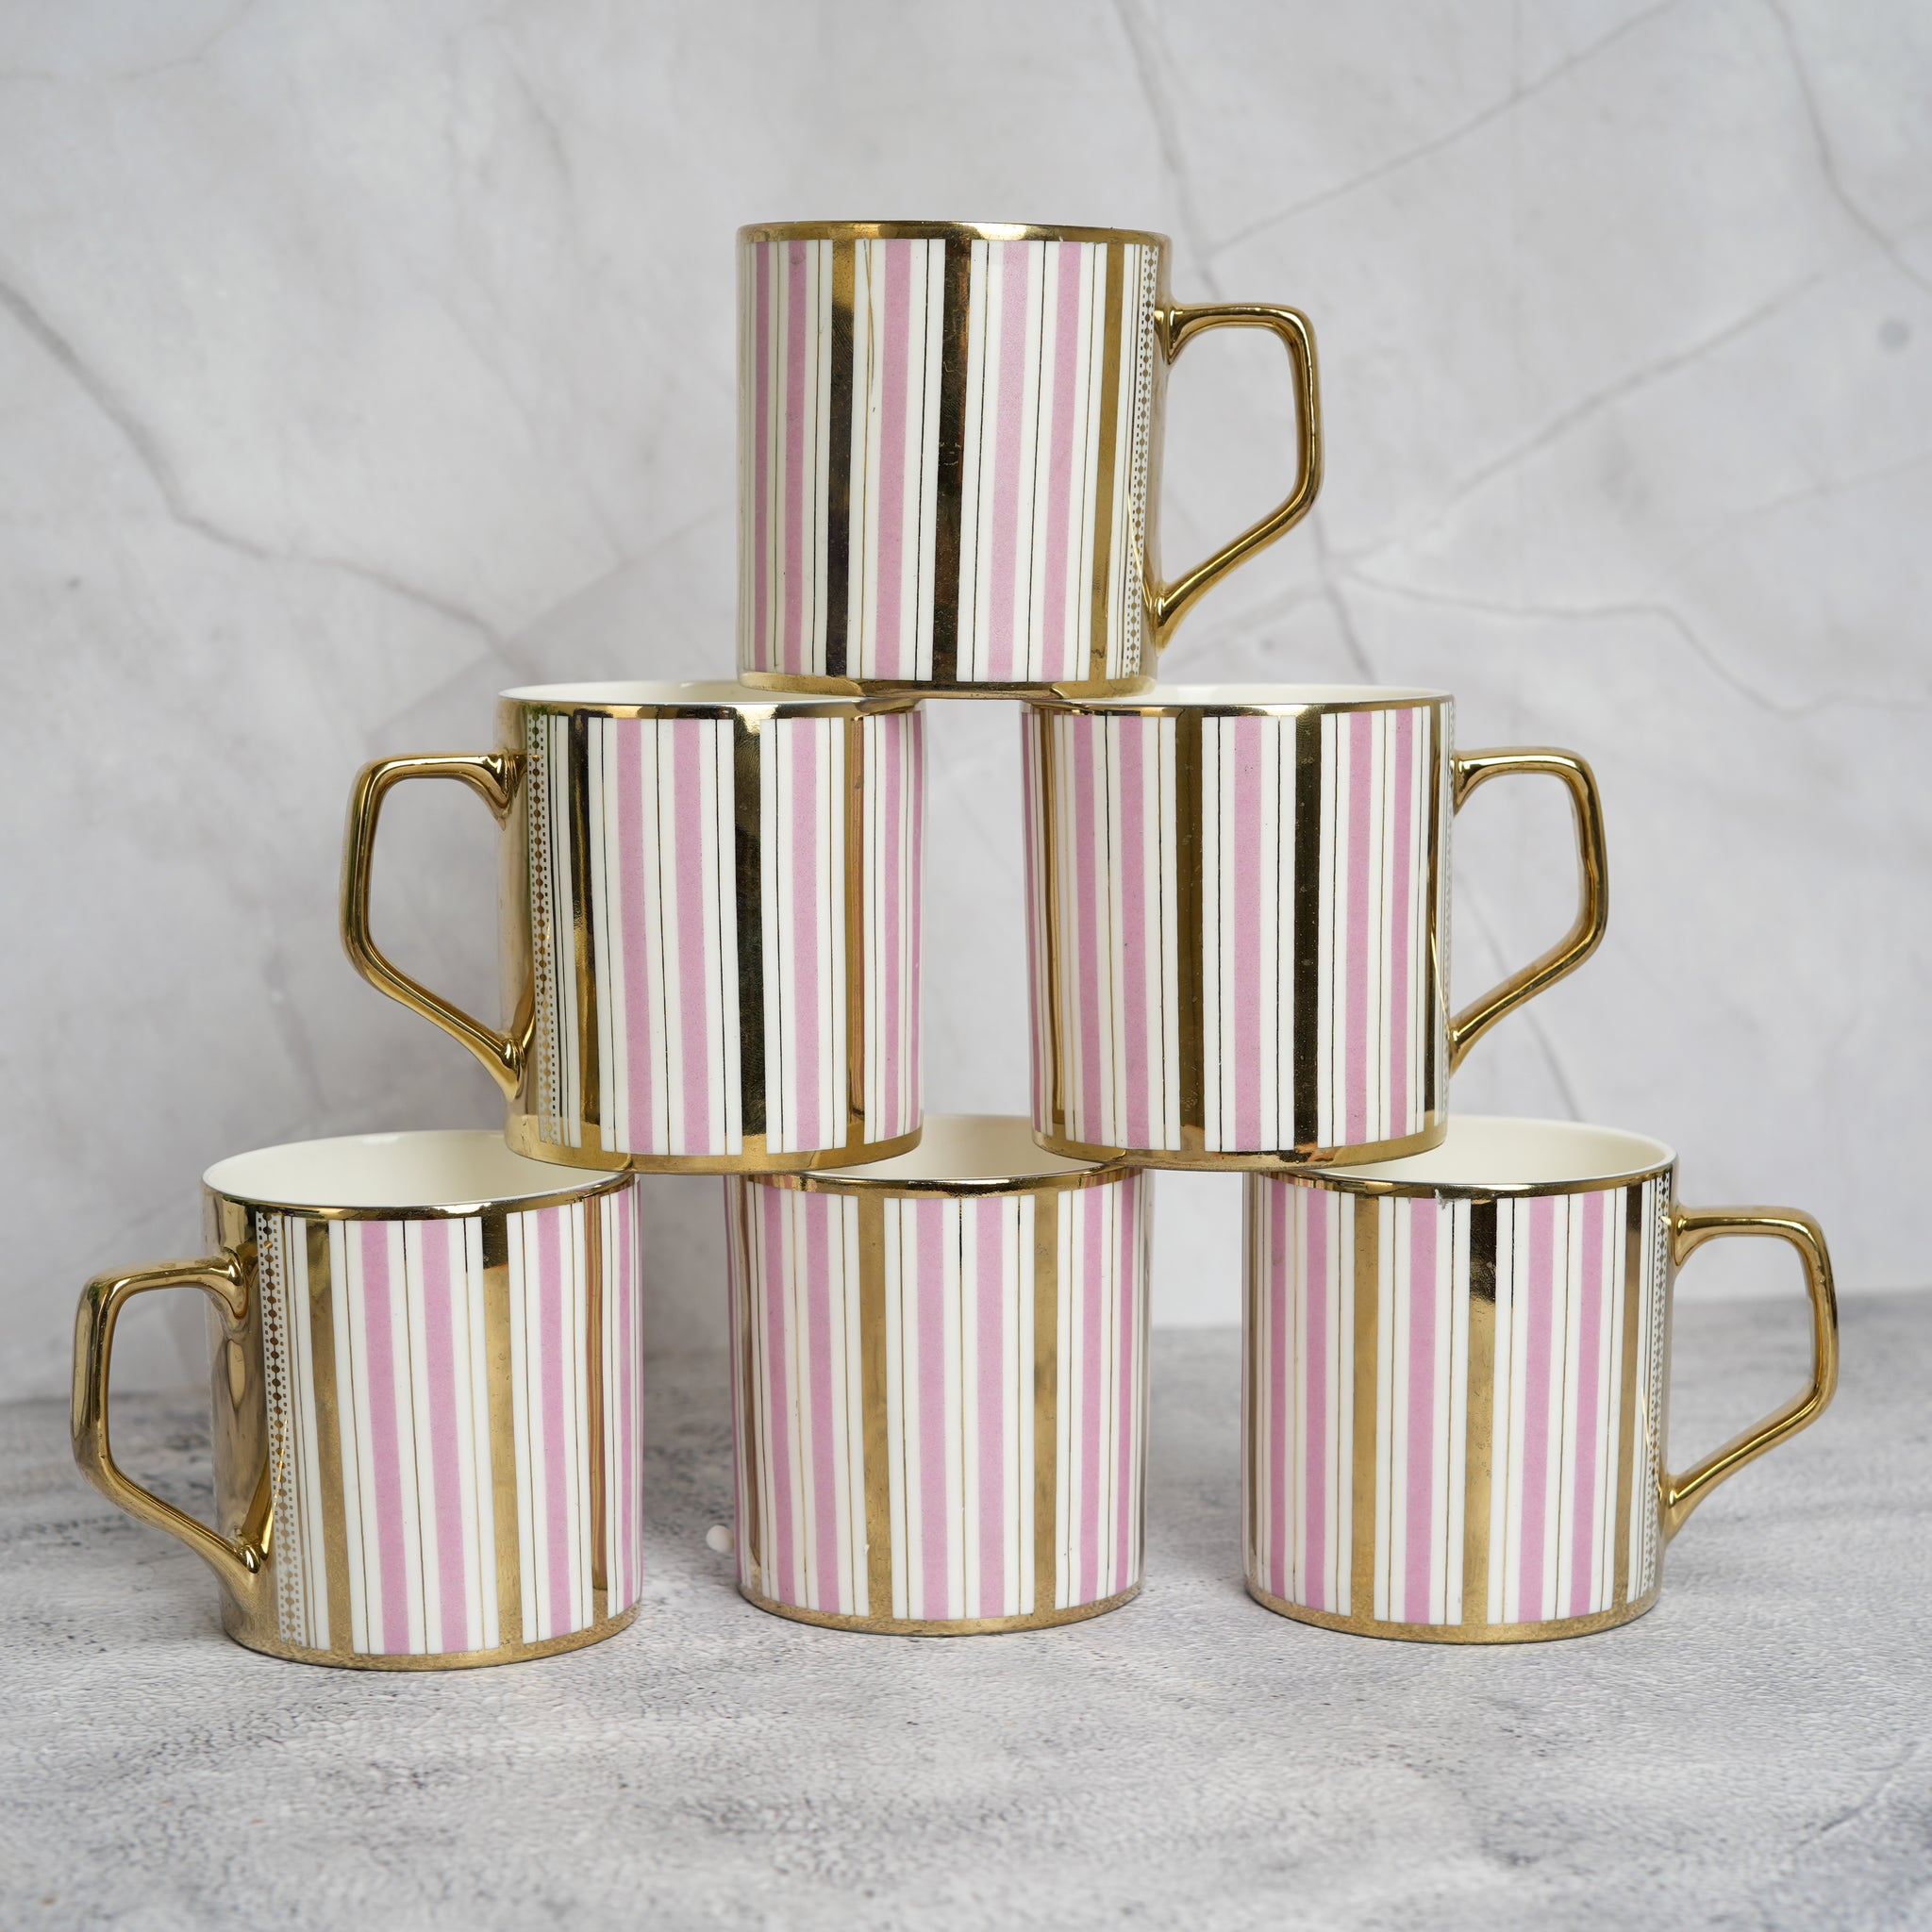 Femora Decorative Pink Gold Line Ceramic Tea and Coffee Mugs, (180 ml, Golden) - 6 Pcs Set (NOT Microwave Safe)